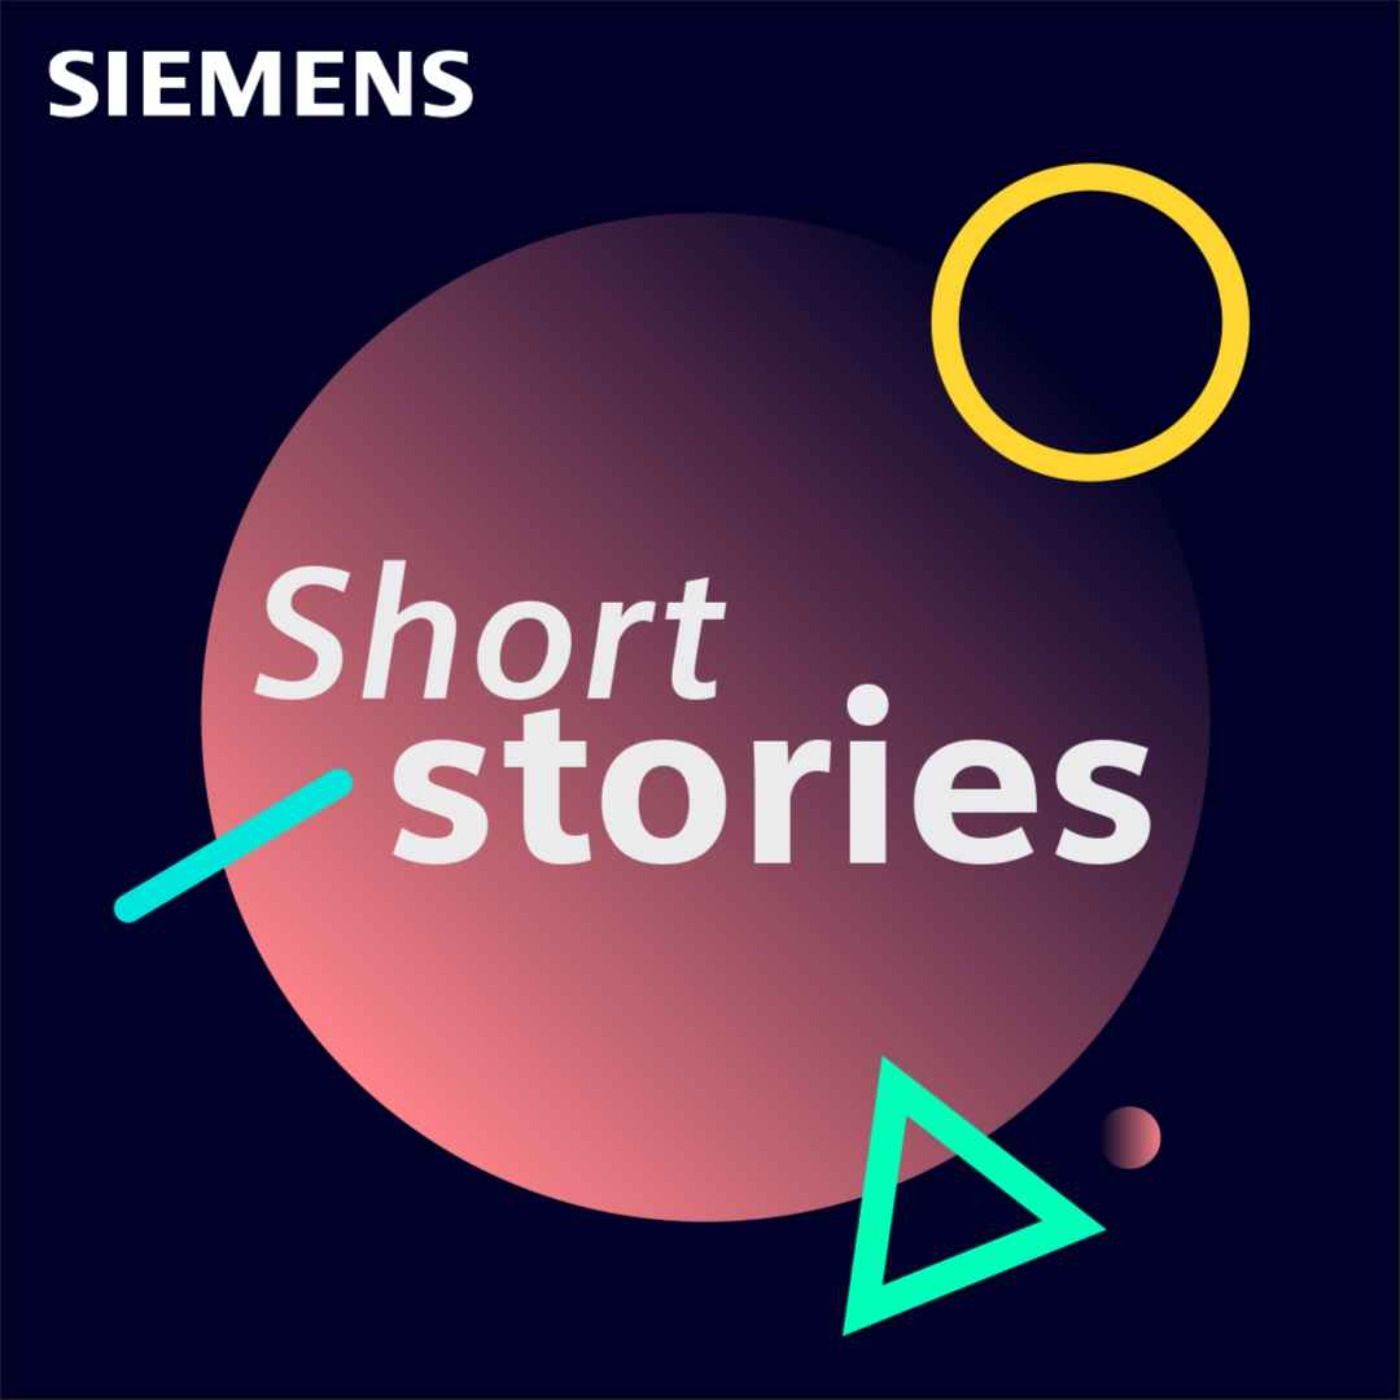 Siemens Short Stories